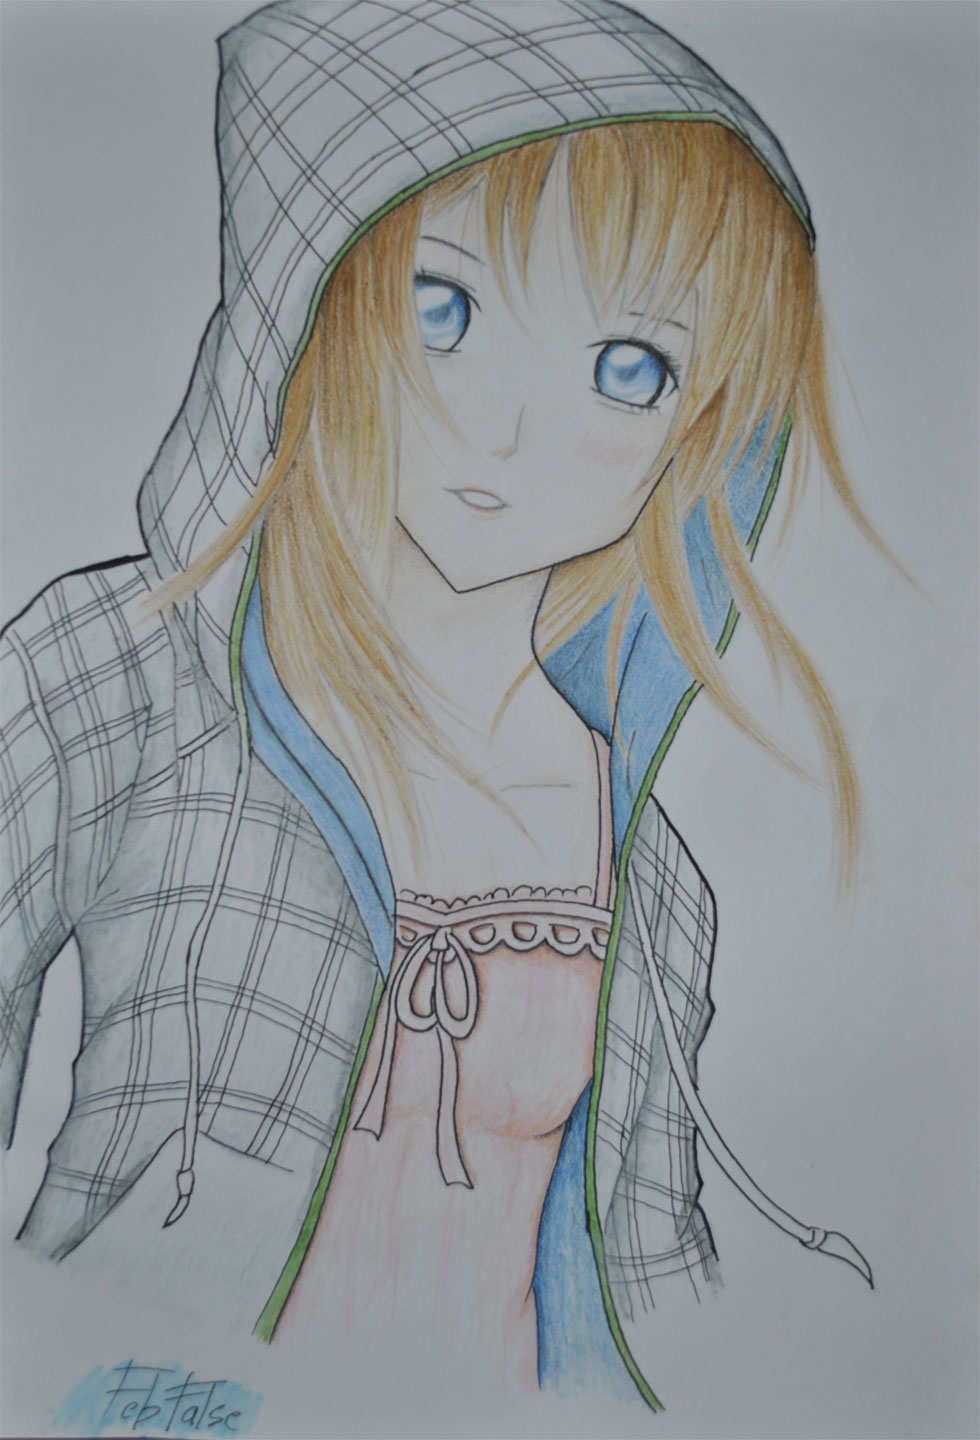 Anime Girl With Hoodie By Febfalse On Deviantart